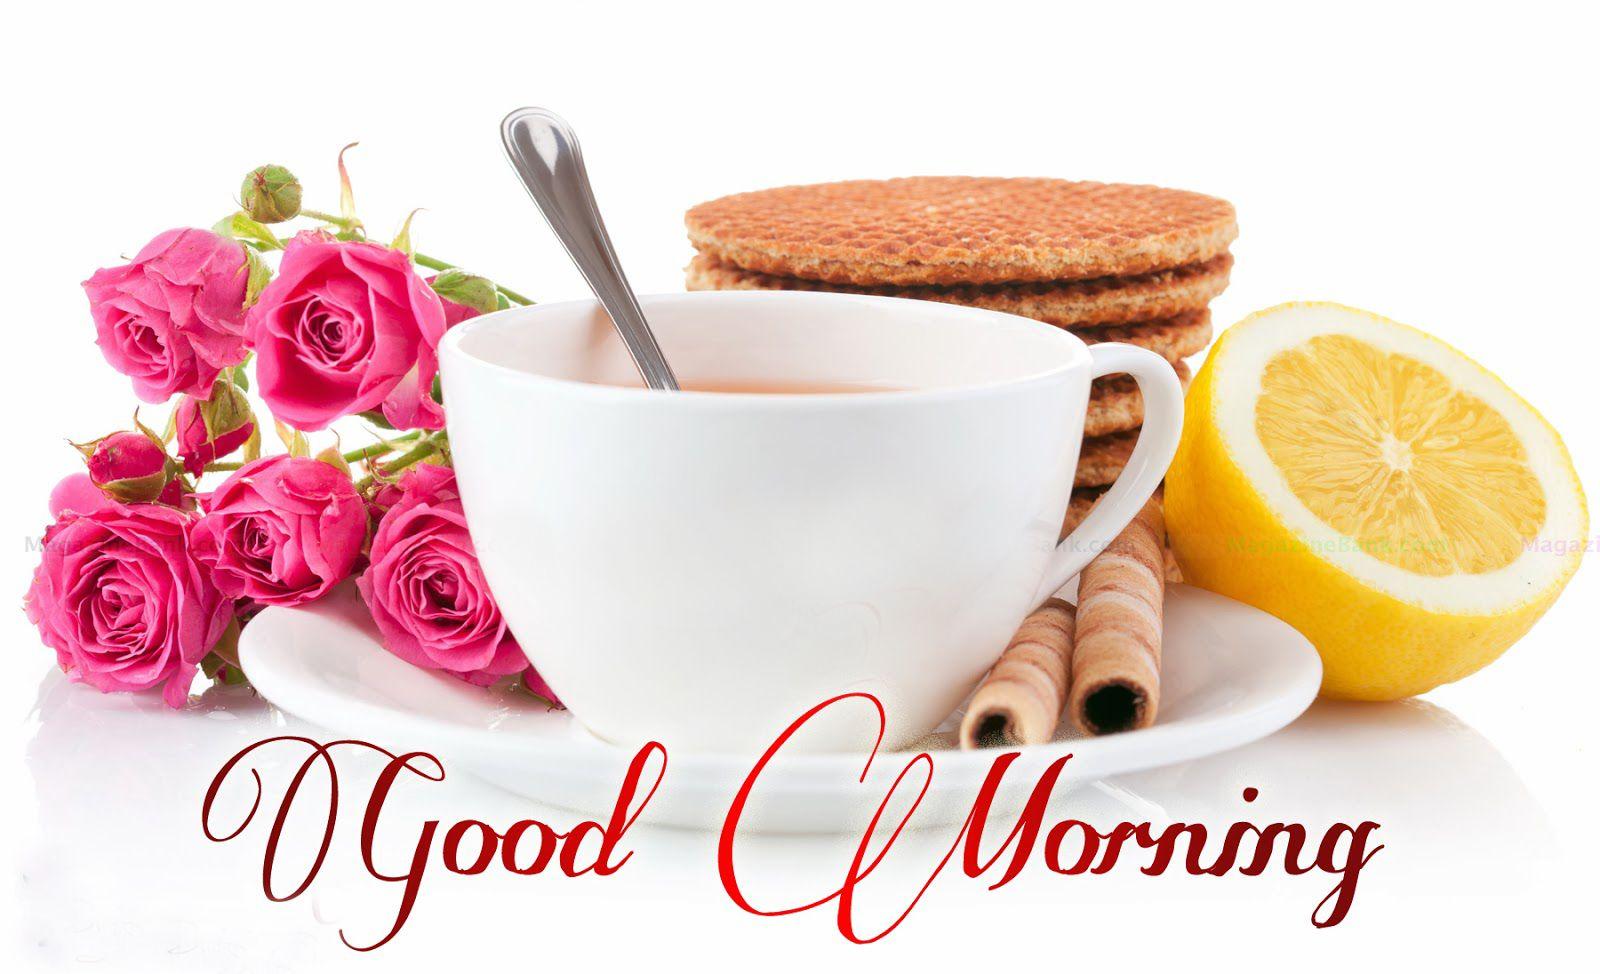 Beautiful Good Morning Wallpaper Image And Photo Free Download